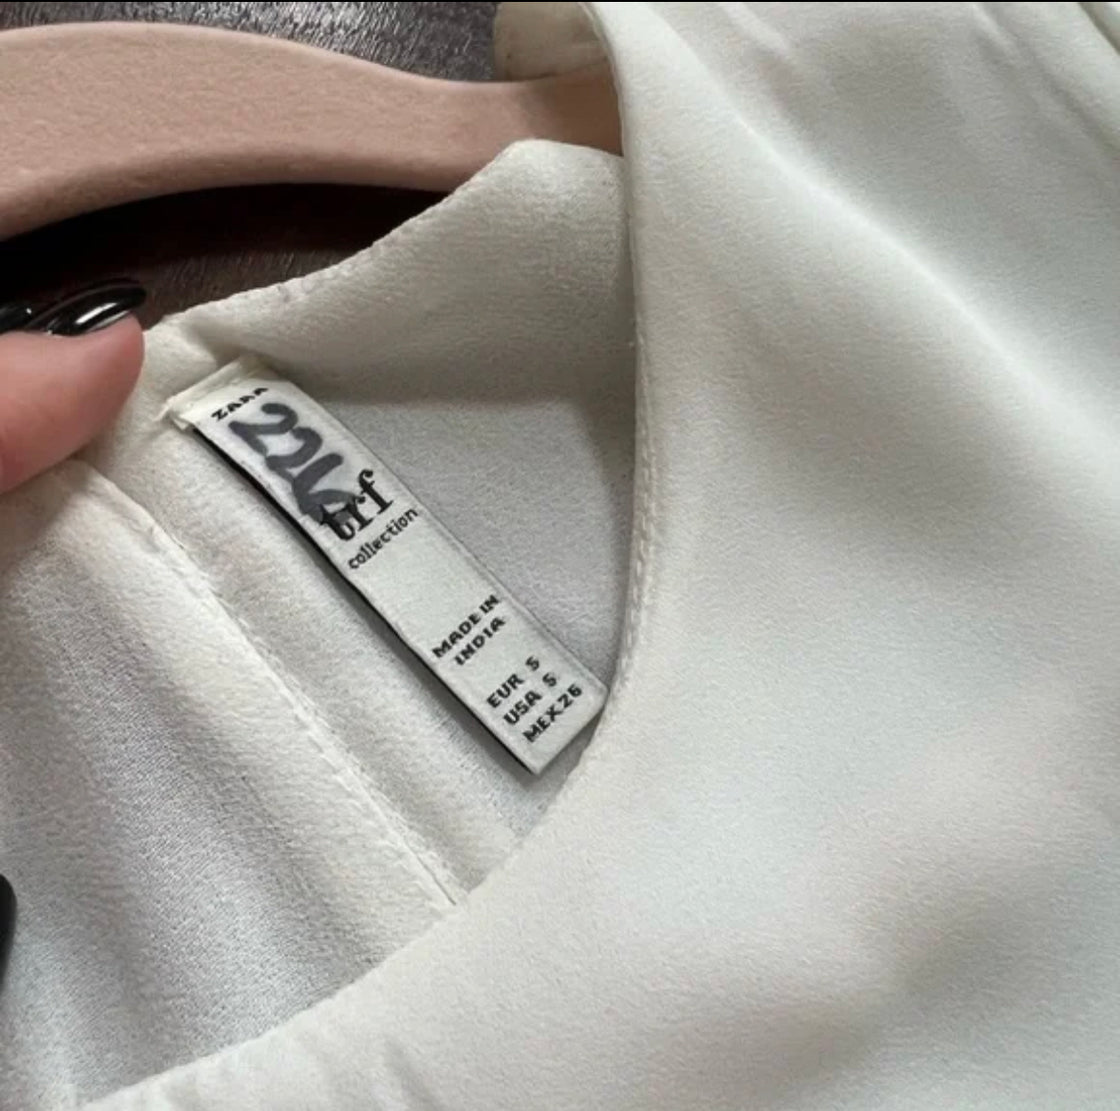 Zara Sleevles White Top Smooth Fabric